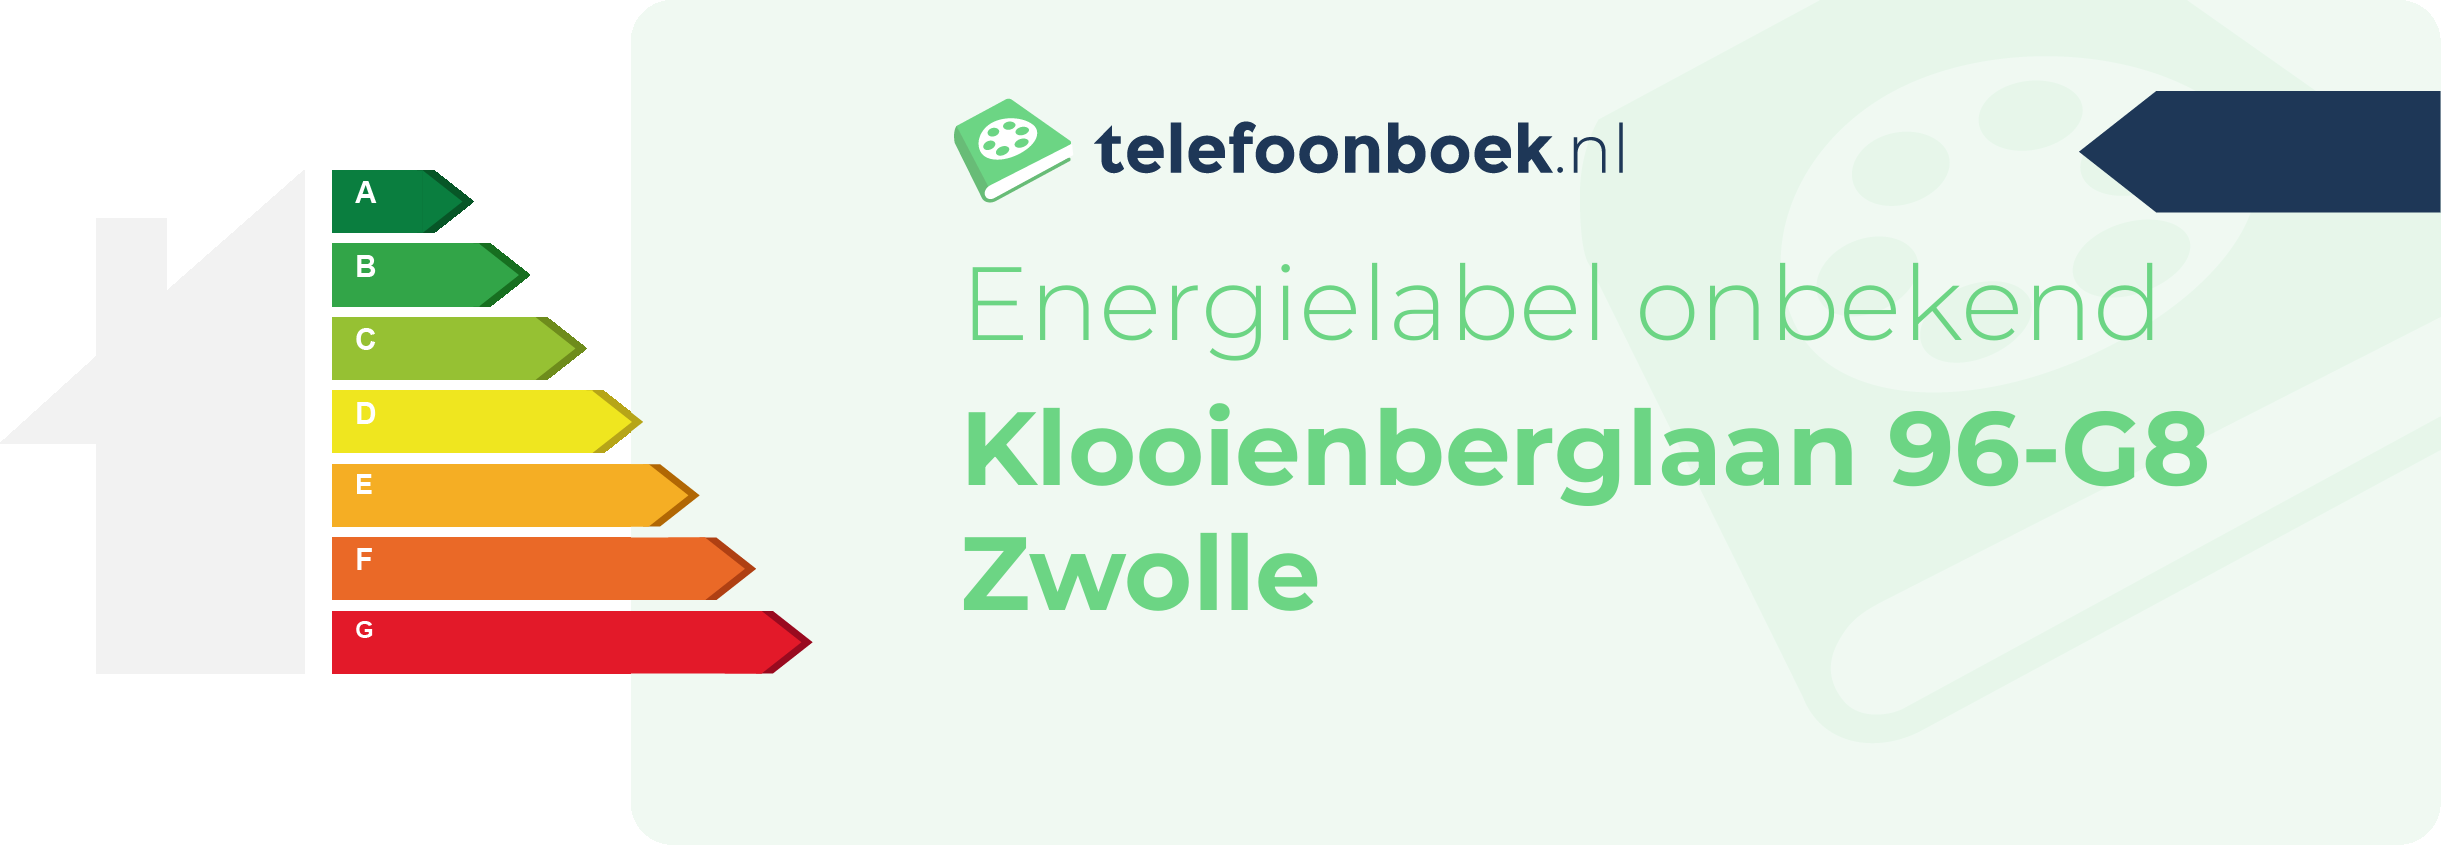 Energielabel Klooienberglaan 96-G8 Zwolle